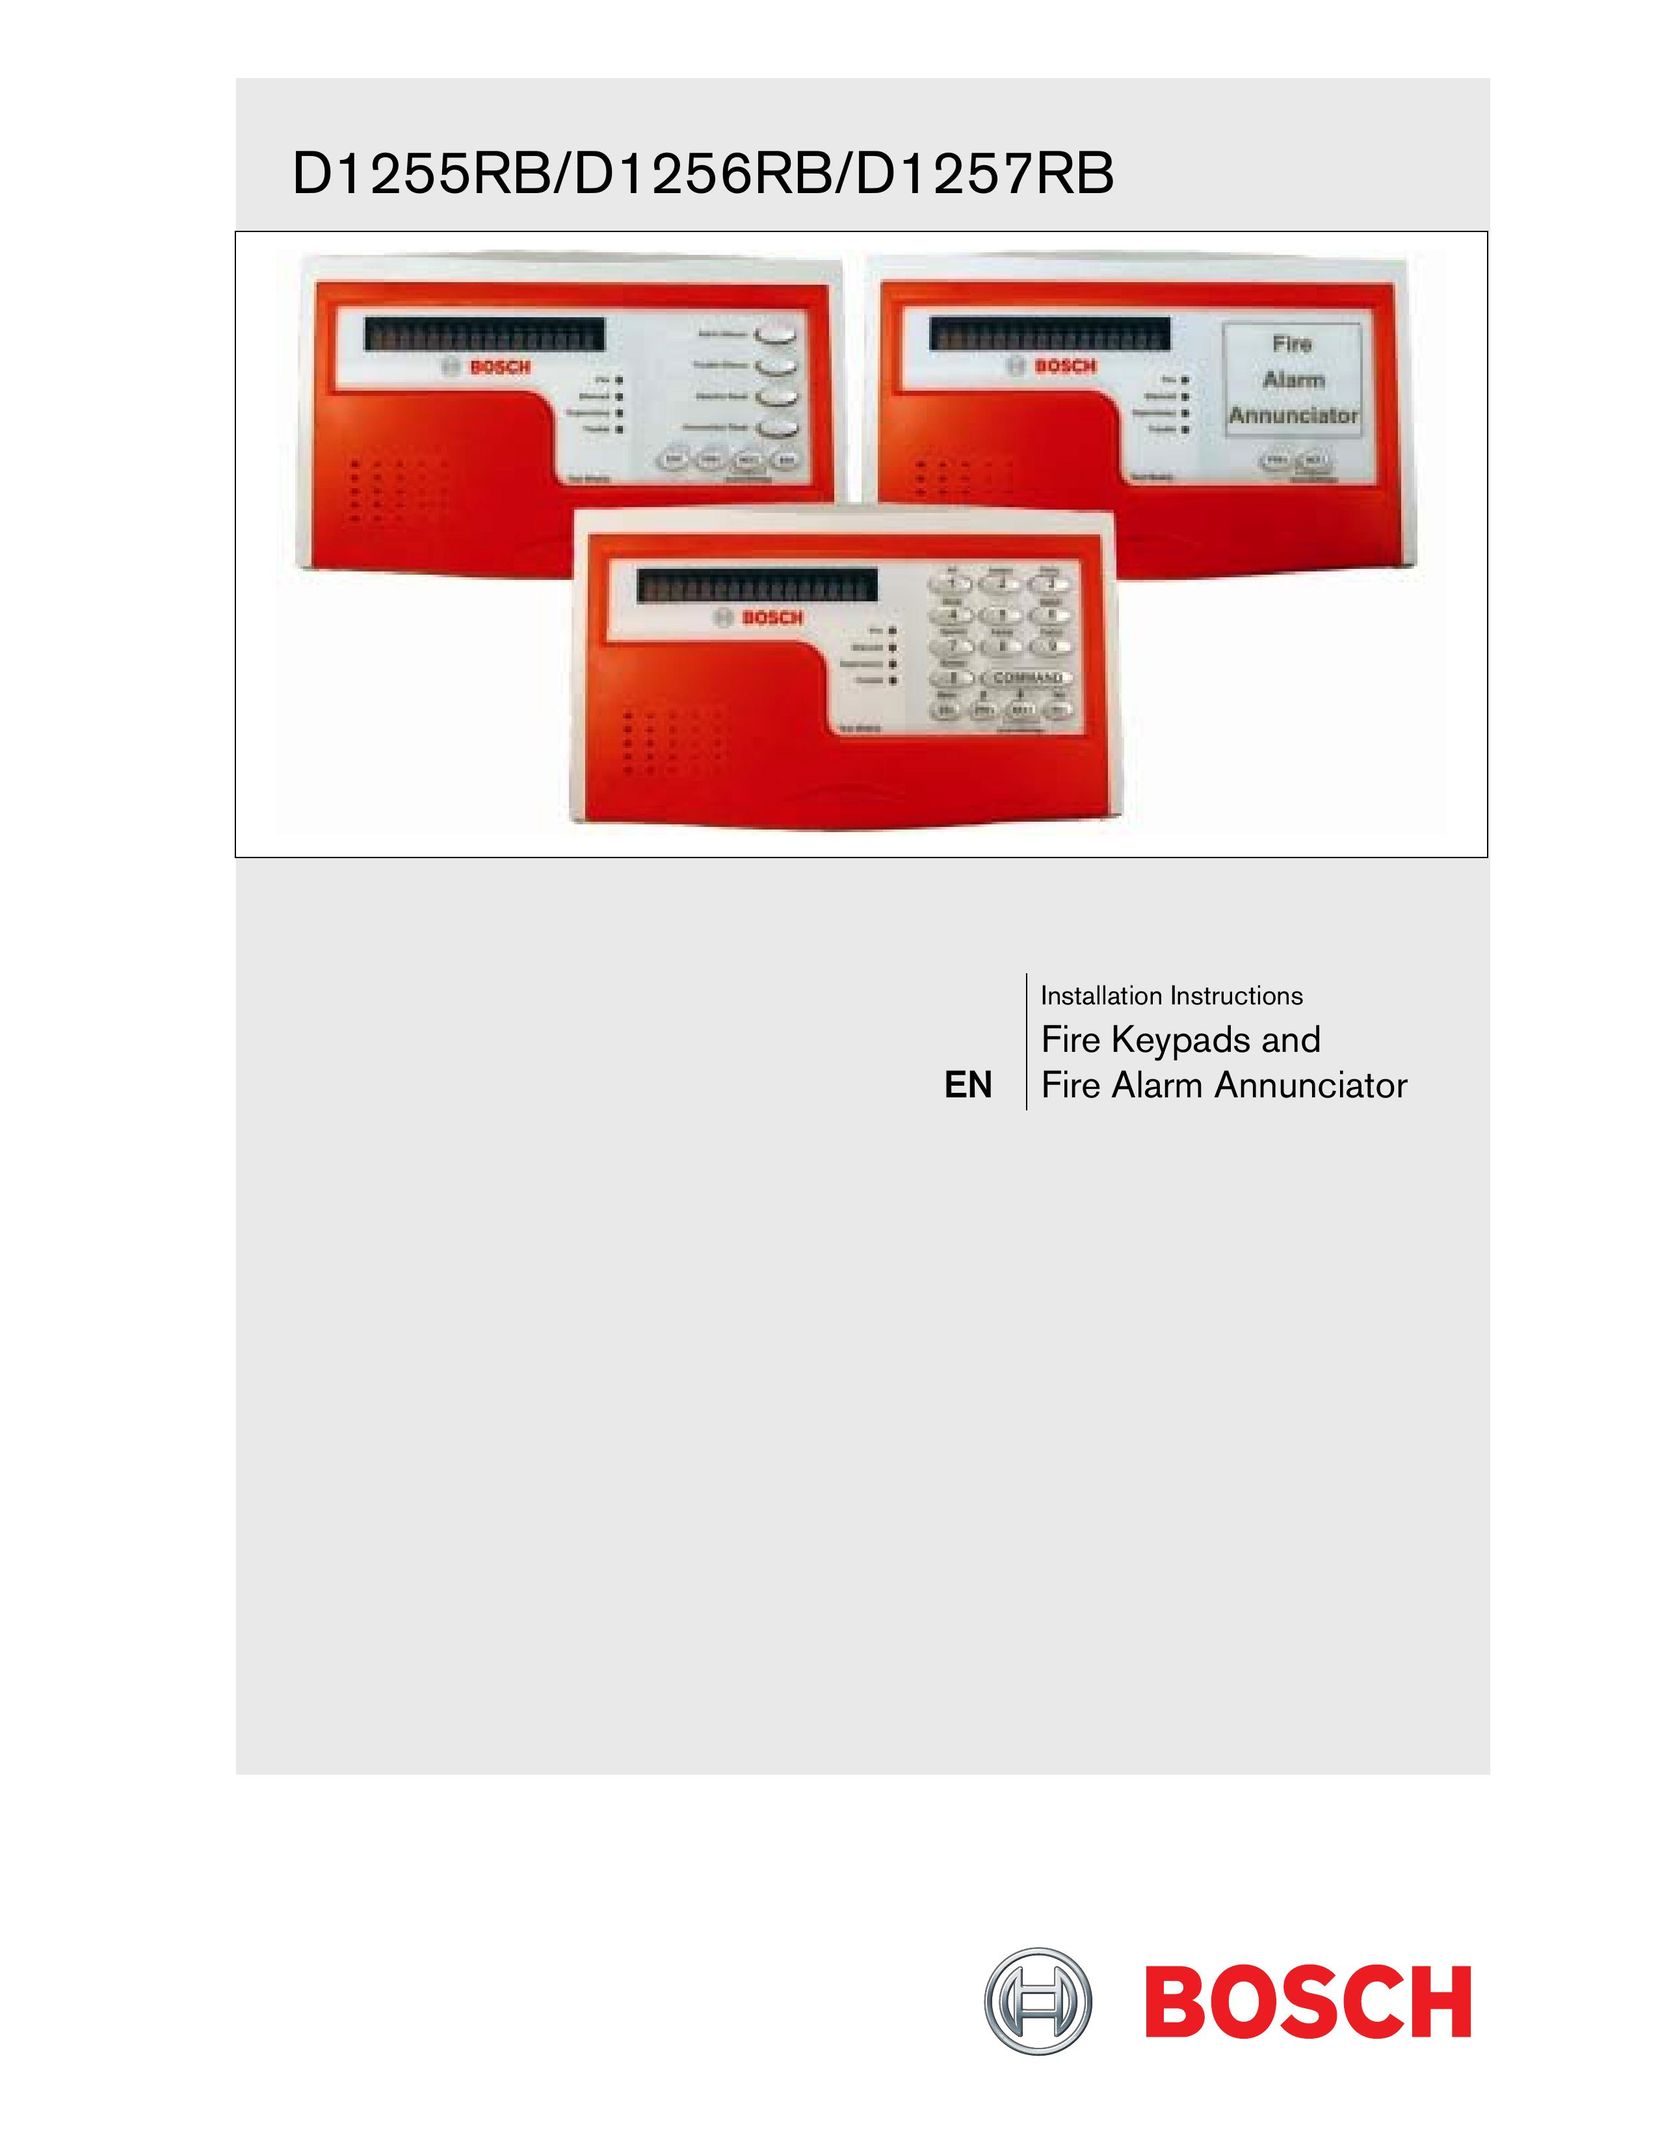 Bosch Appliances D1256RB Smoke Alarm User Manual